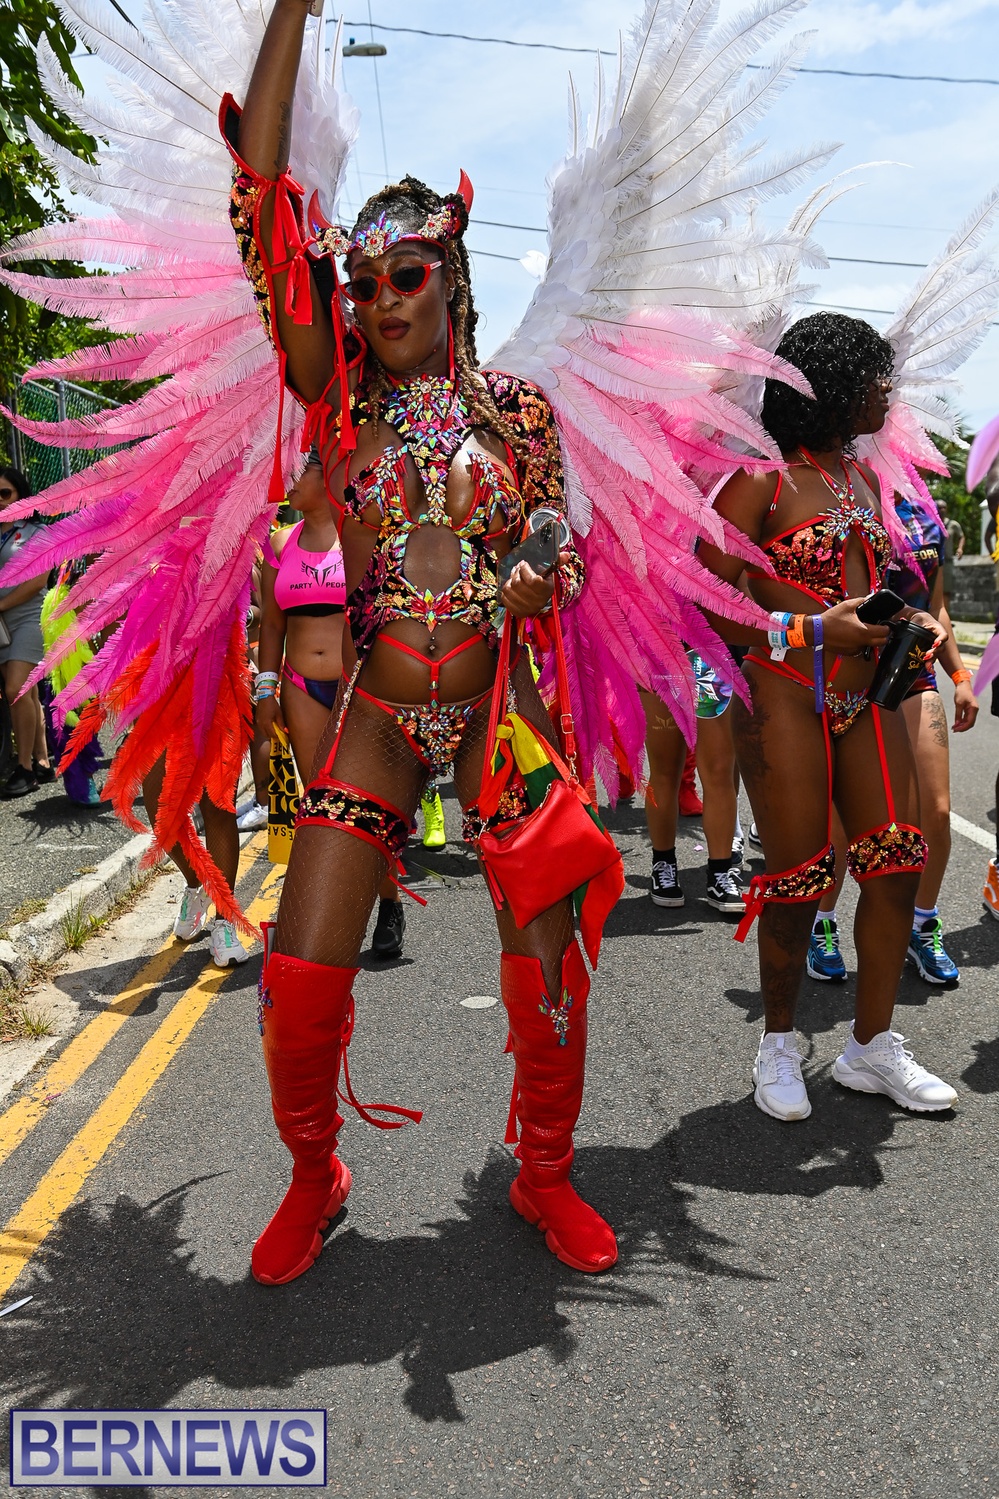 Carnival in Bermuda ‘Revel de Road’ event  party June 2022 AW (24)